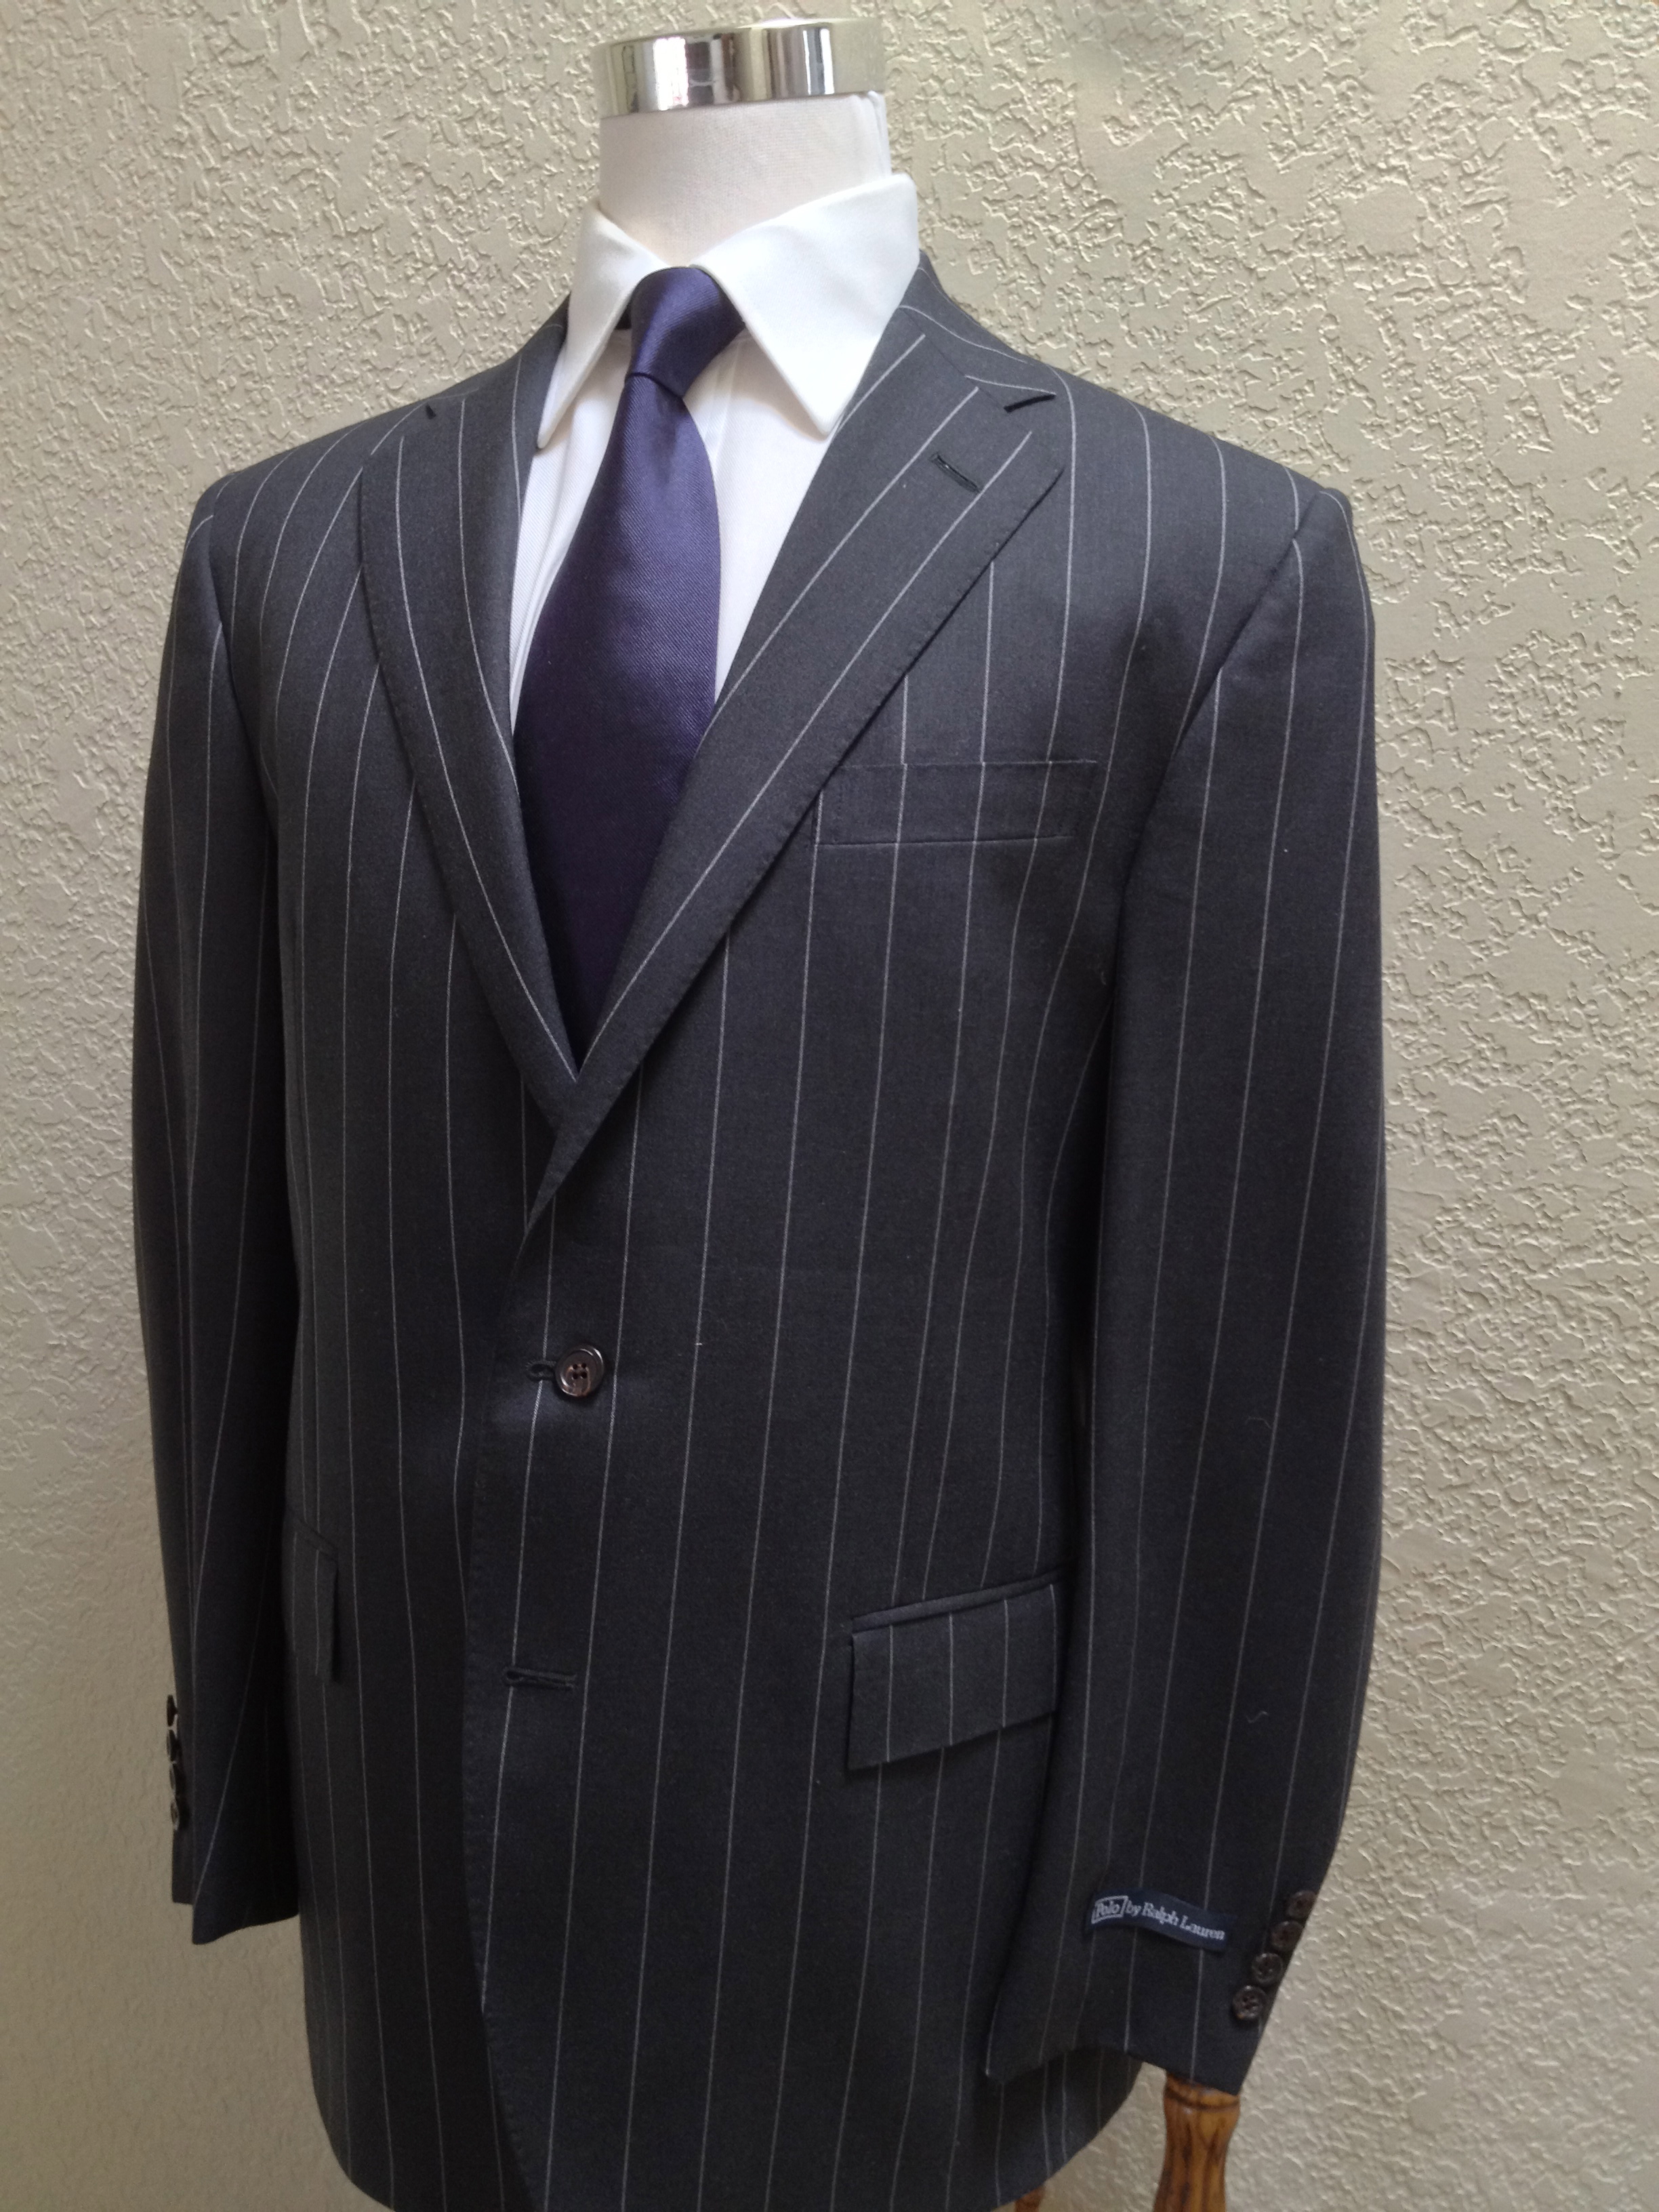 NWT Polo Ralph Lauren Charcoal Gray Pinstripe Suit - Italy/Corneliani ...